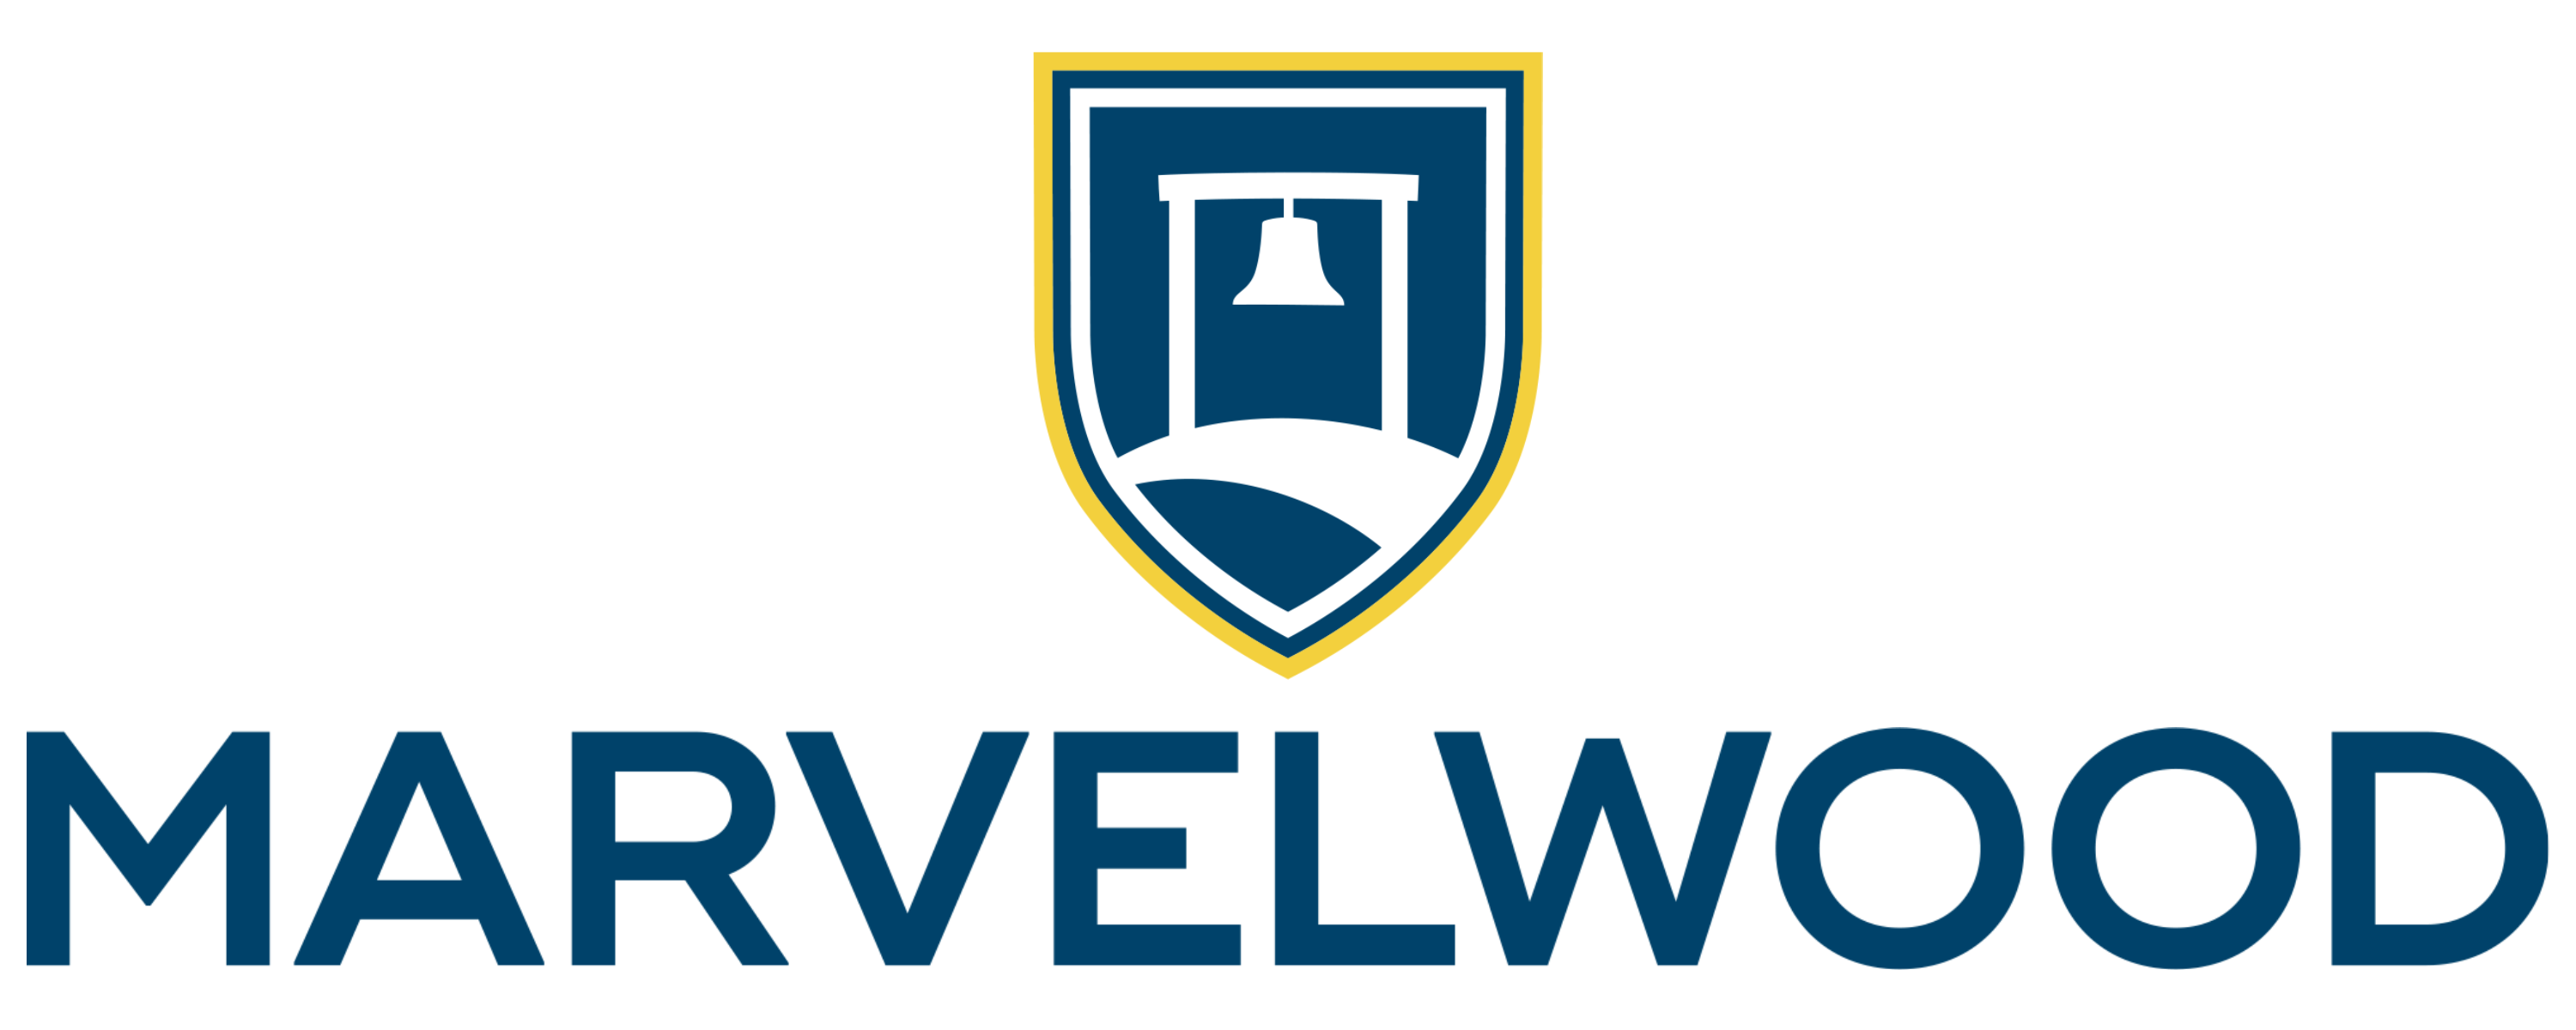 Marvelwood School Logo